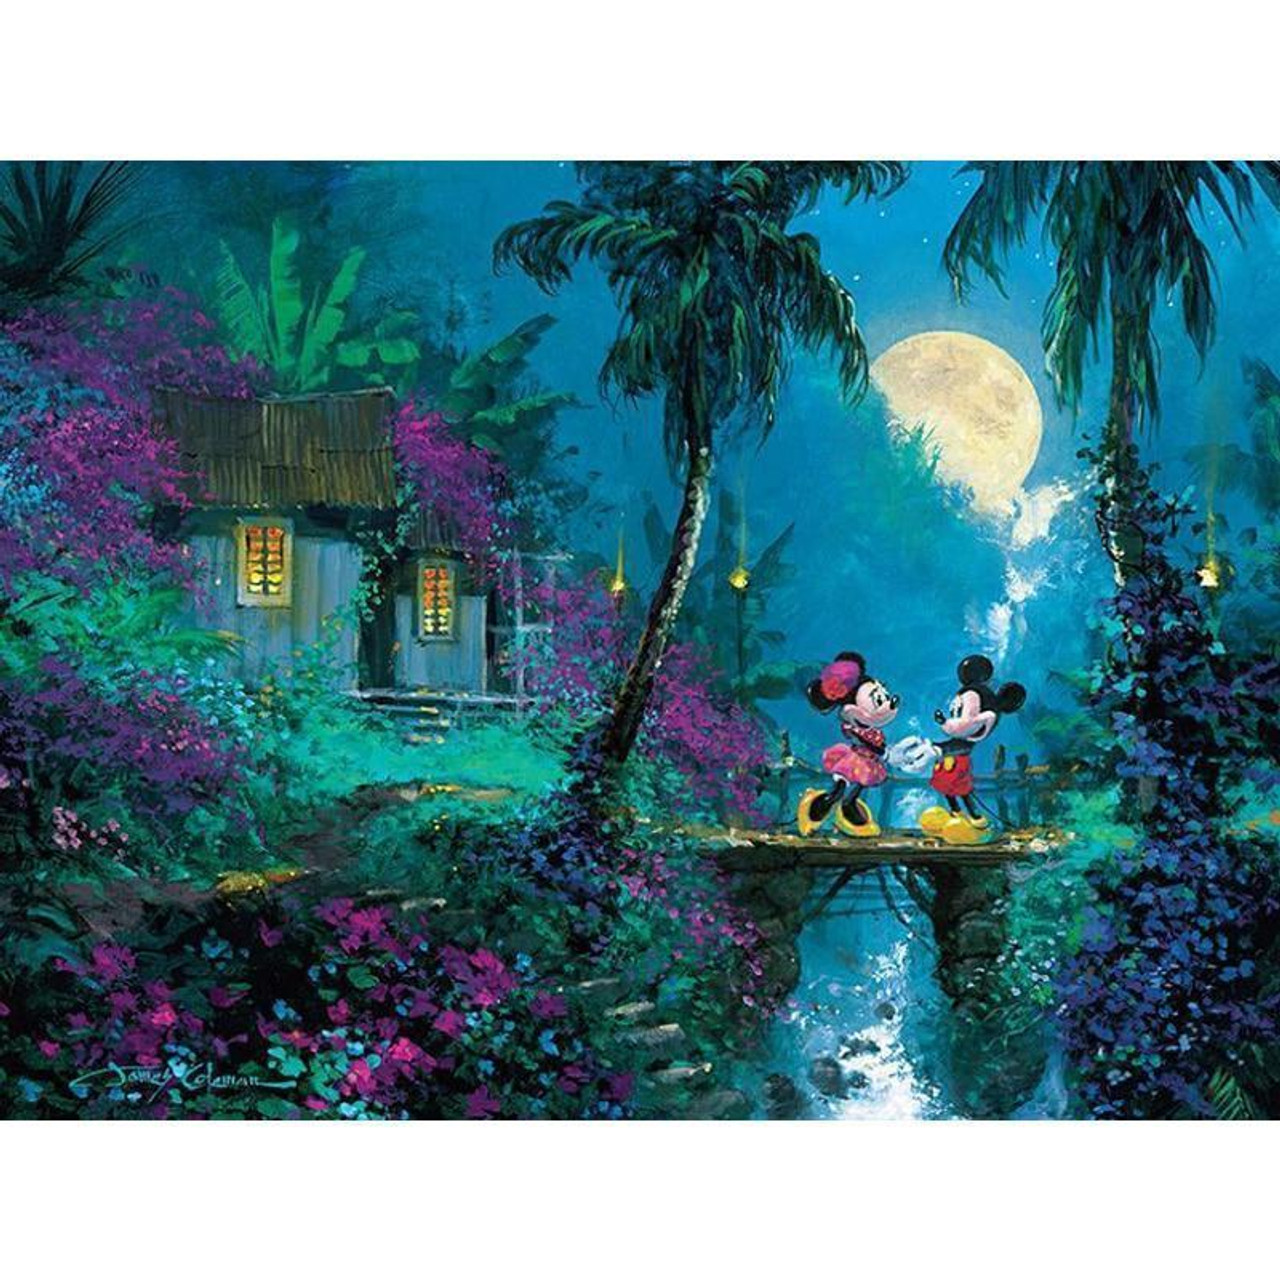  Mickey and Minnie Mouse Disney Diamond Art DIY 5D